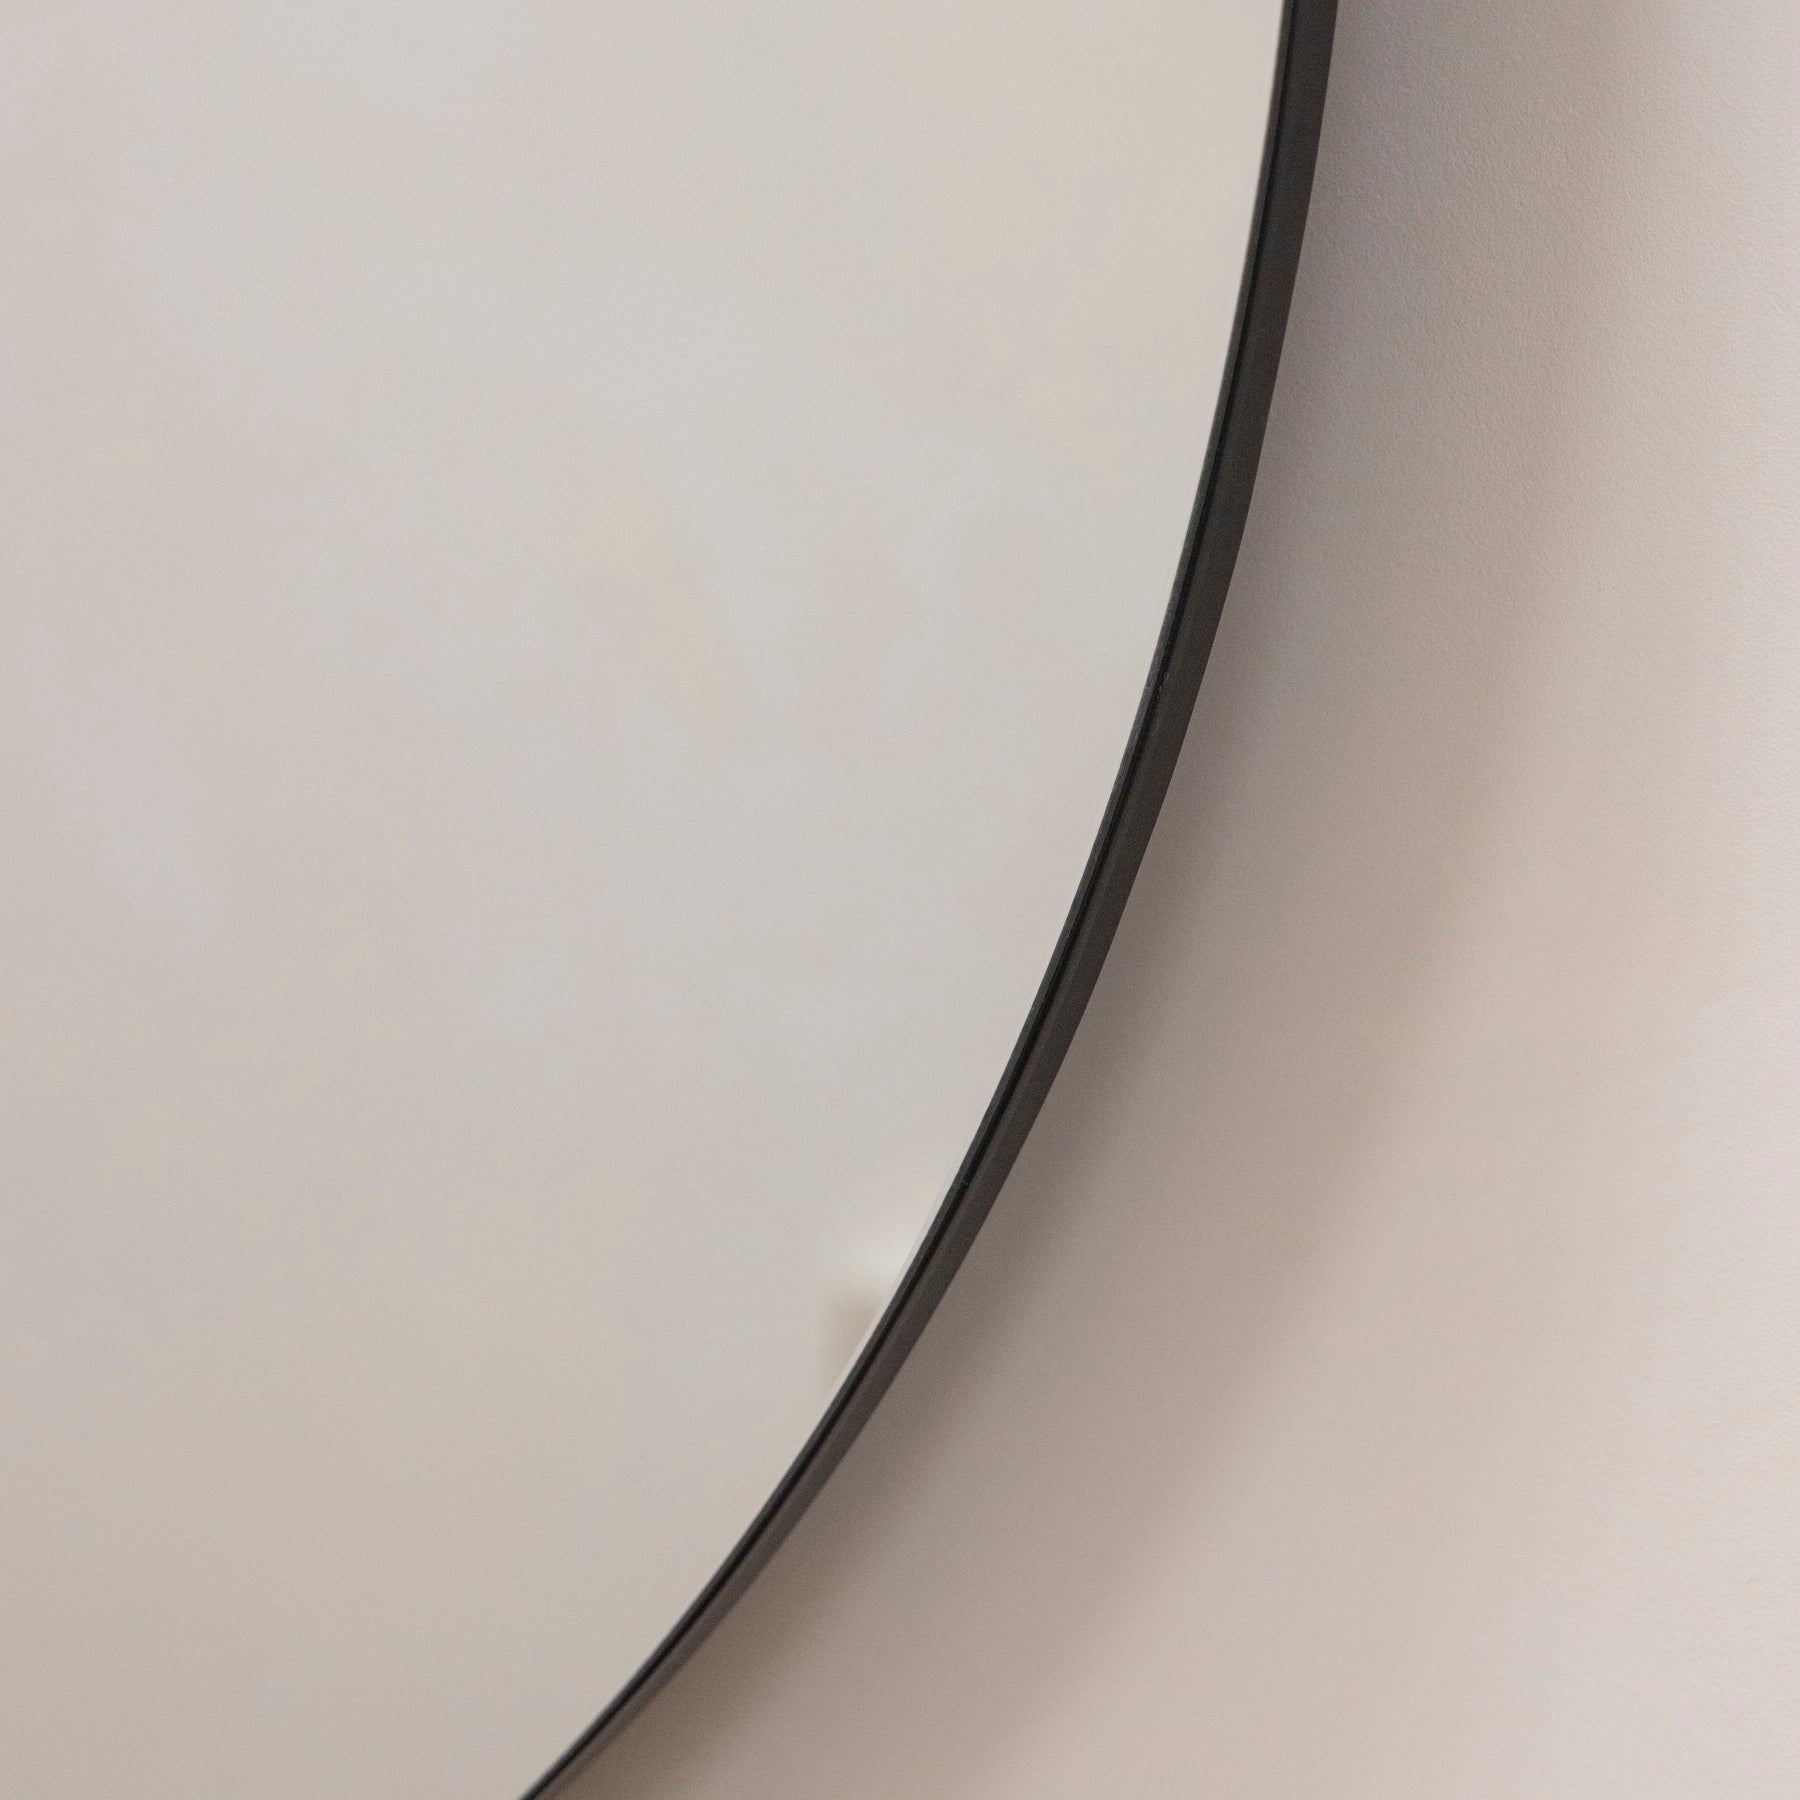 Edge - Extra Large Frameless Round Wall Mirror 110cm x 110cm